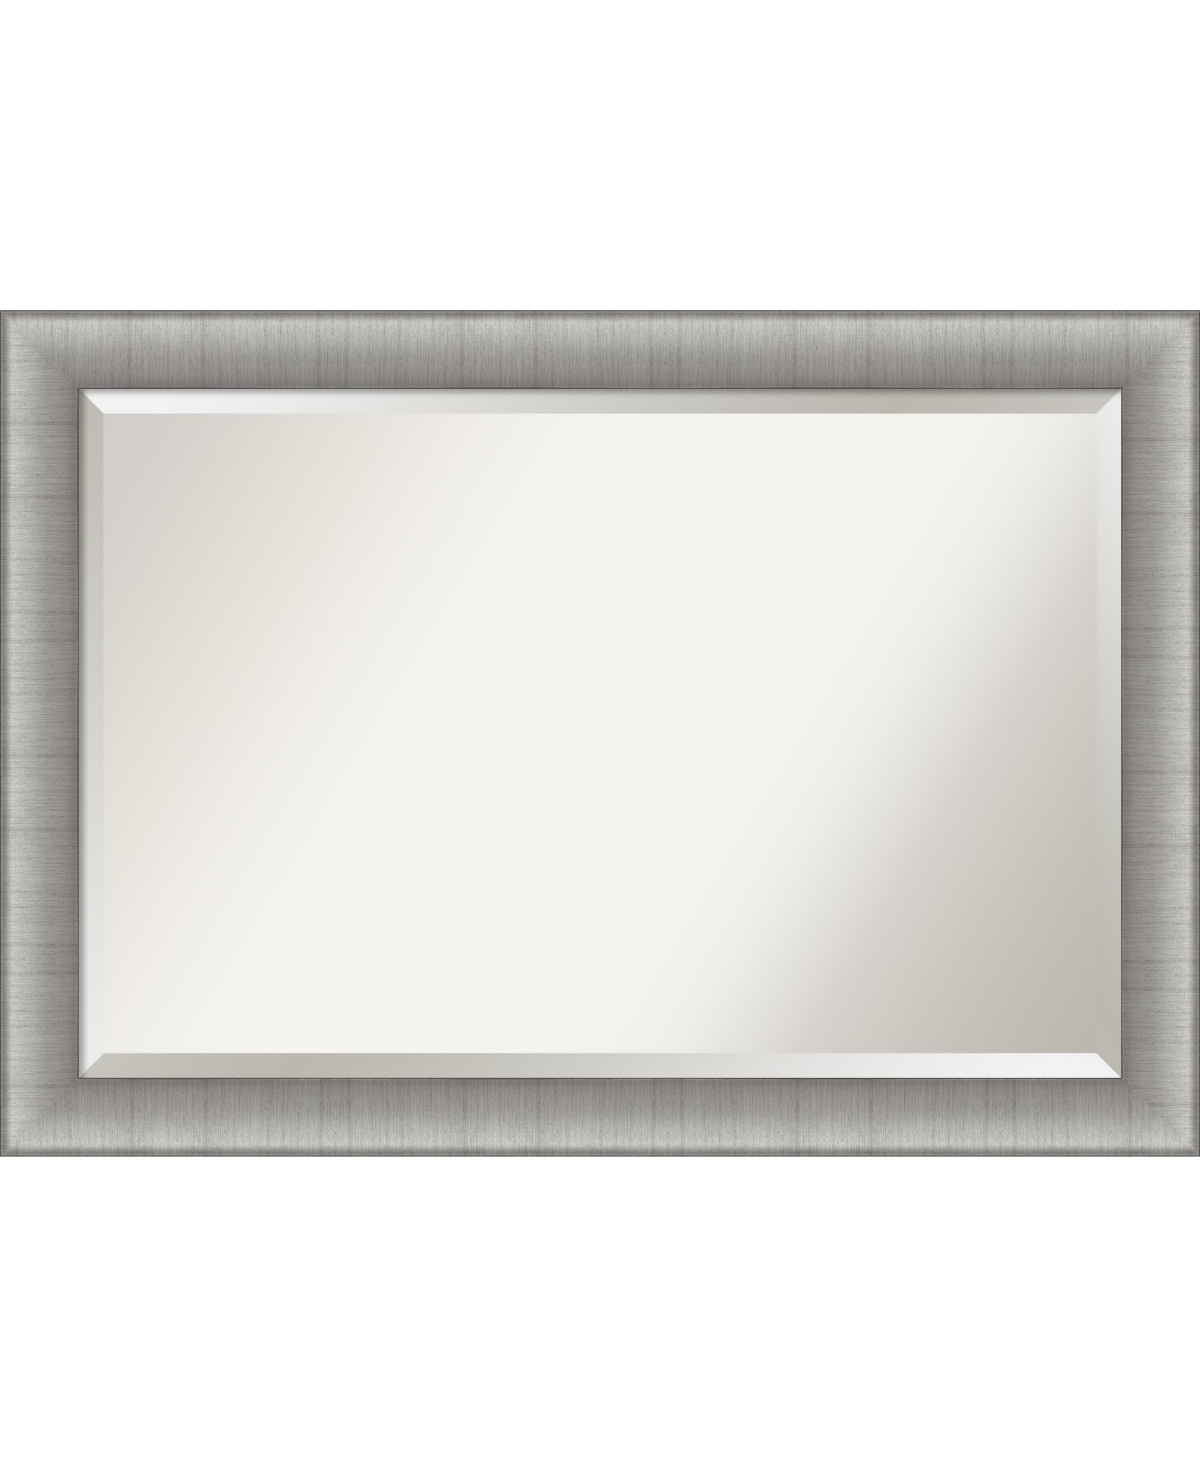 Elegant Brushed Framed Bathroom Vanity Wall Mirror, 40.75" x 28.75" - Silver